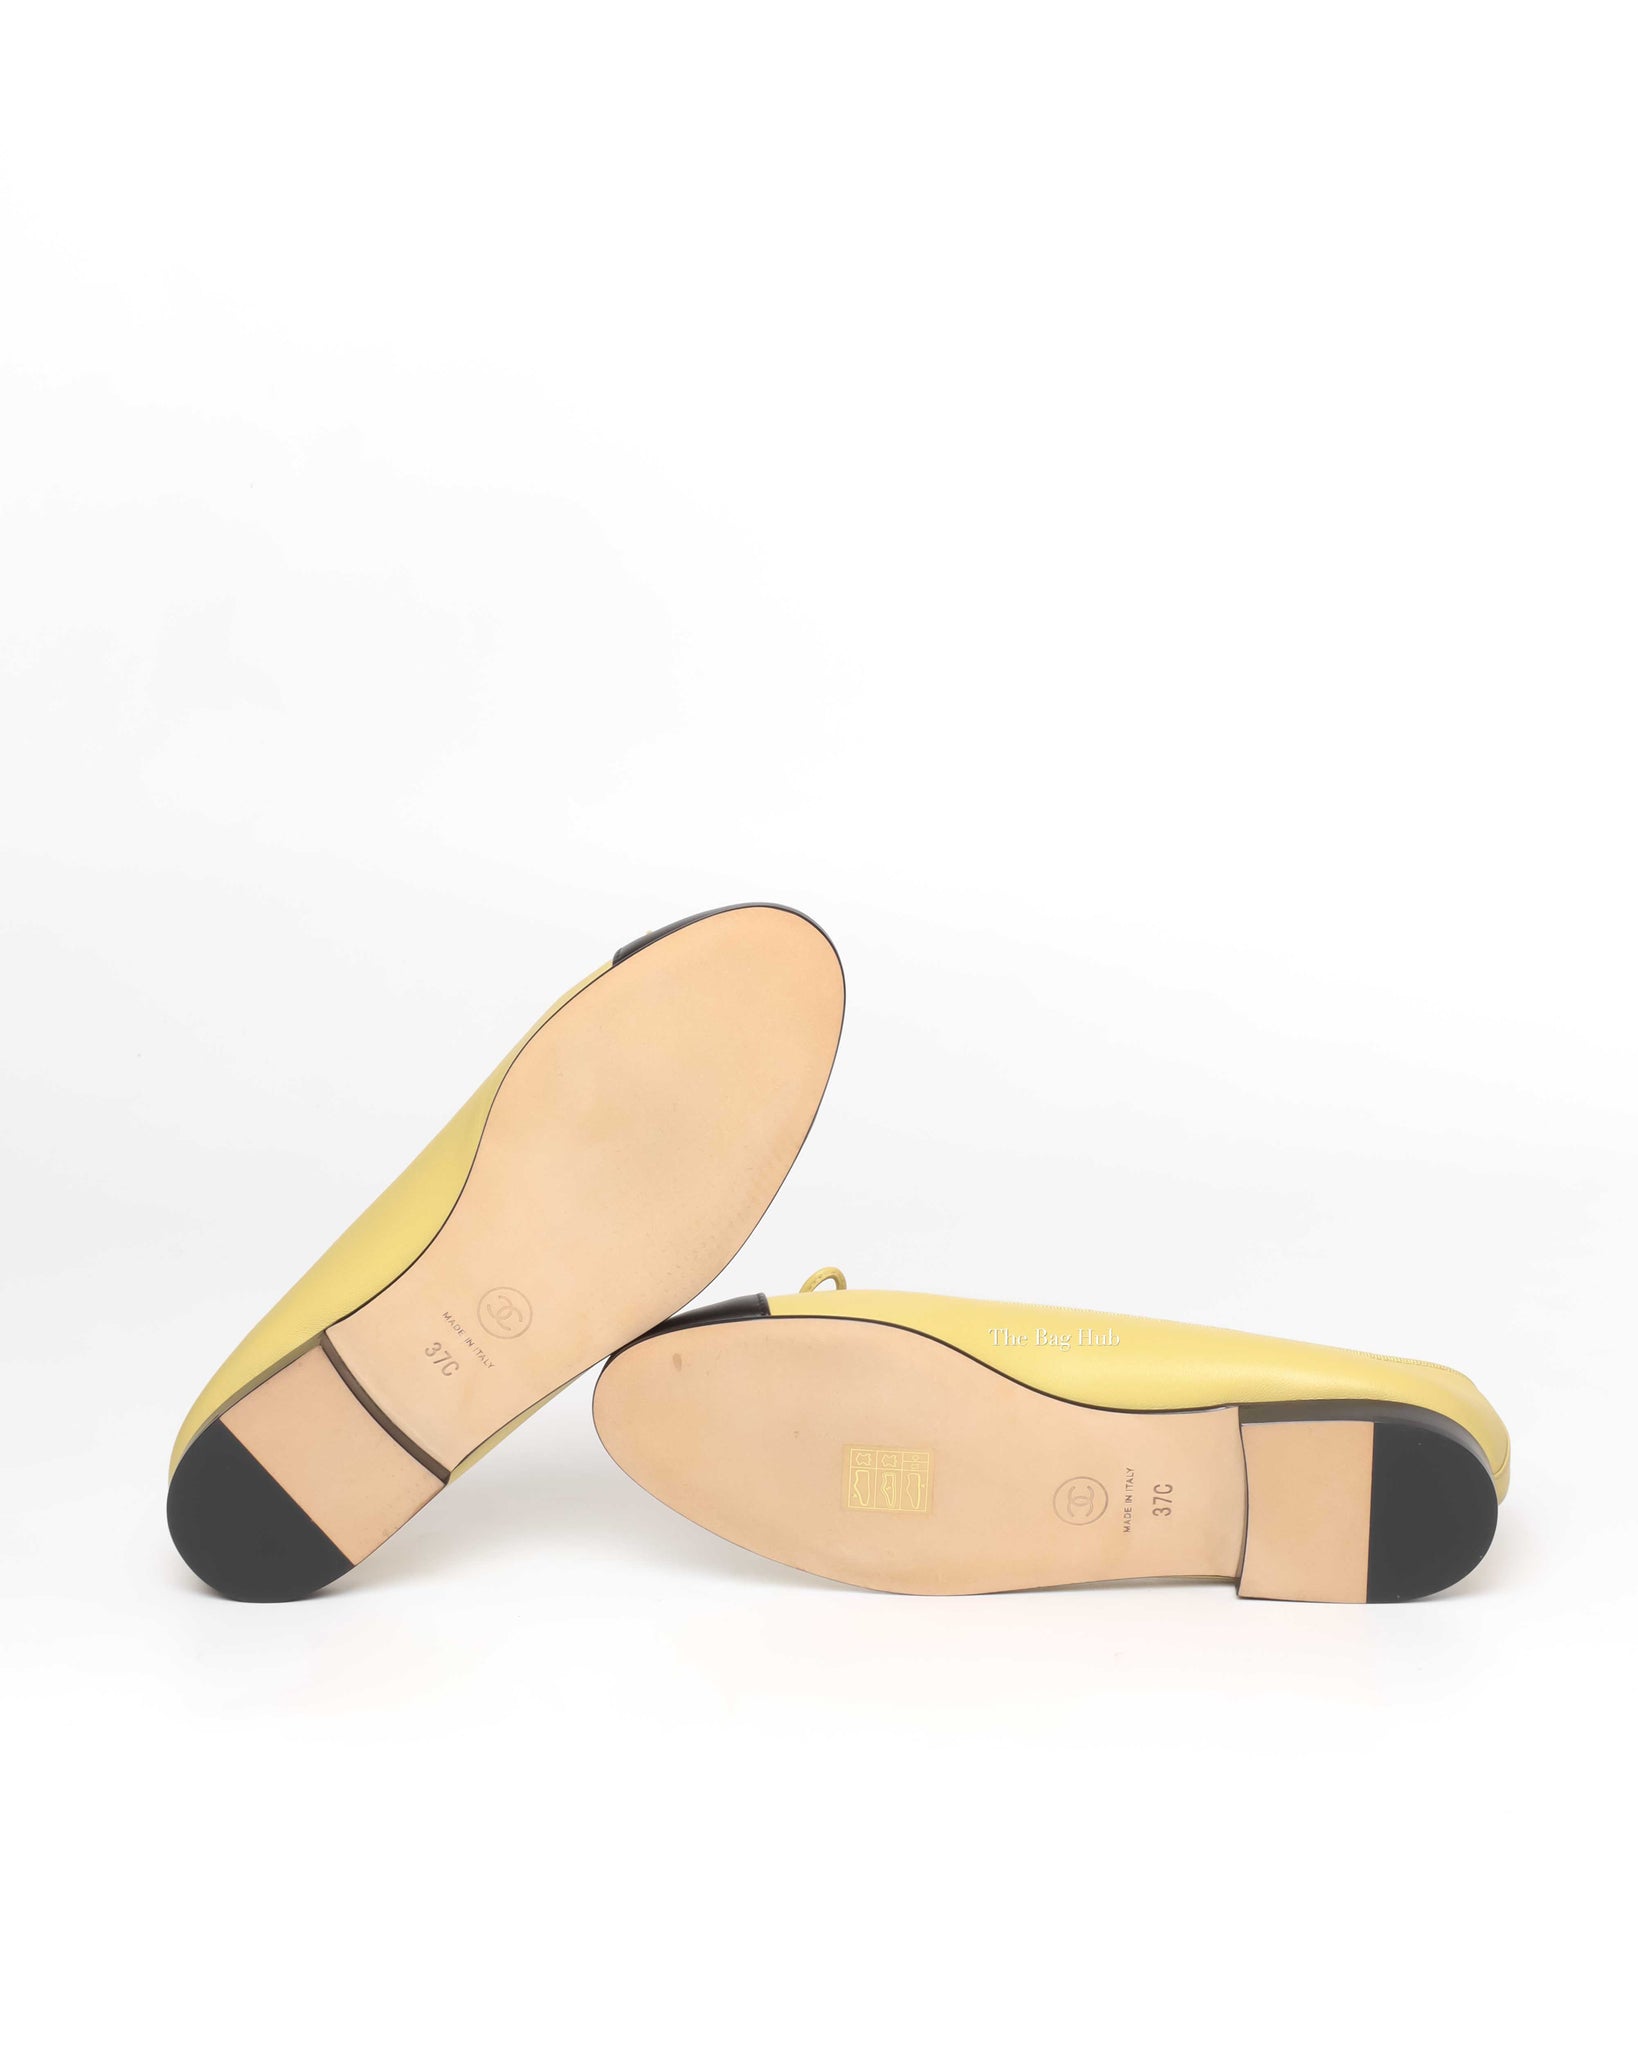 Chanel Yellow/Black Ballet Flats Size 37C-8